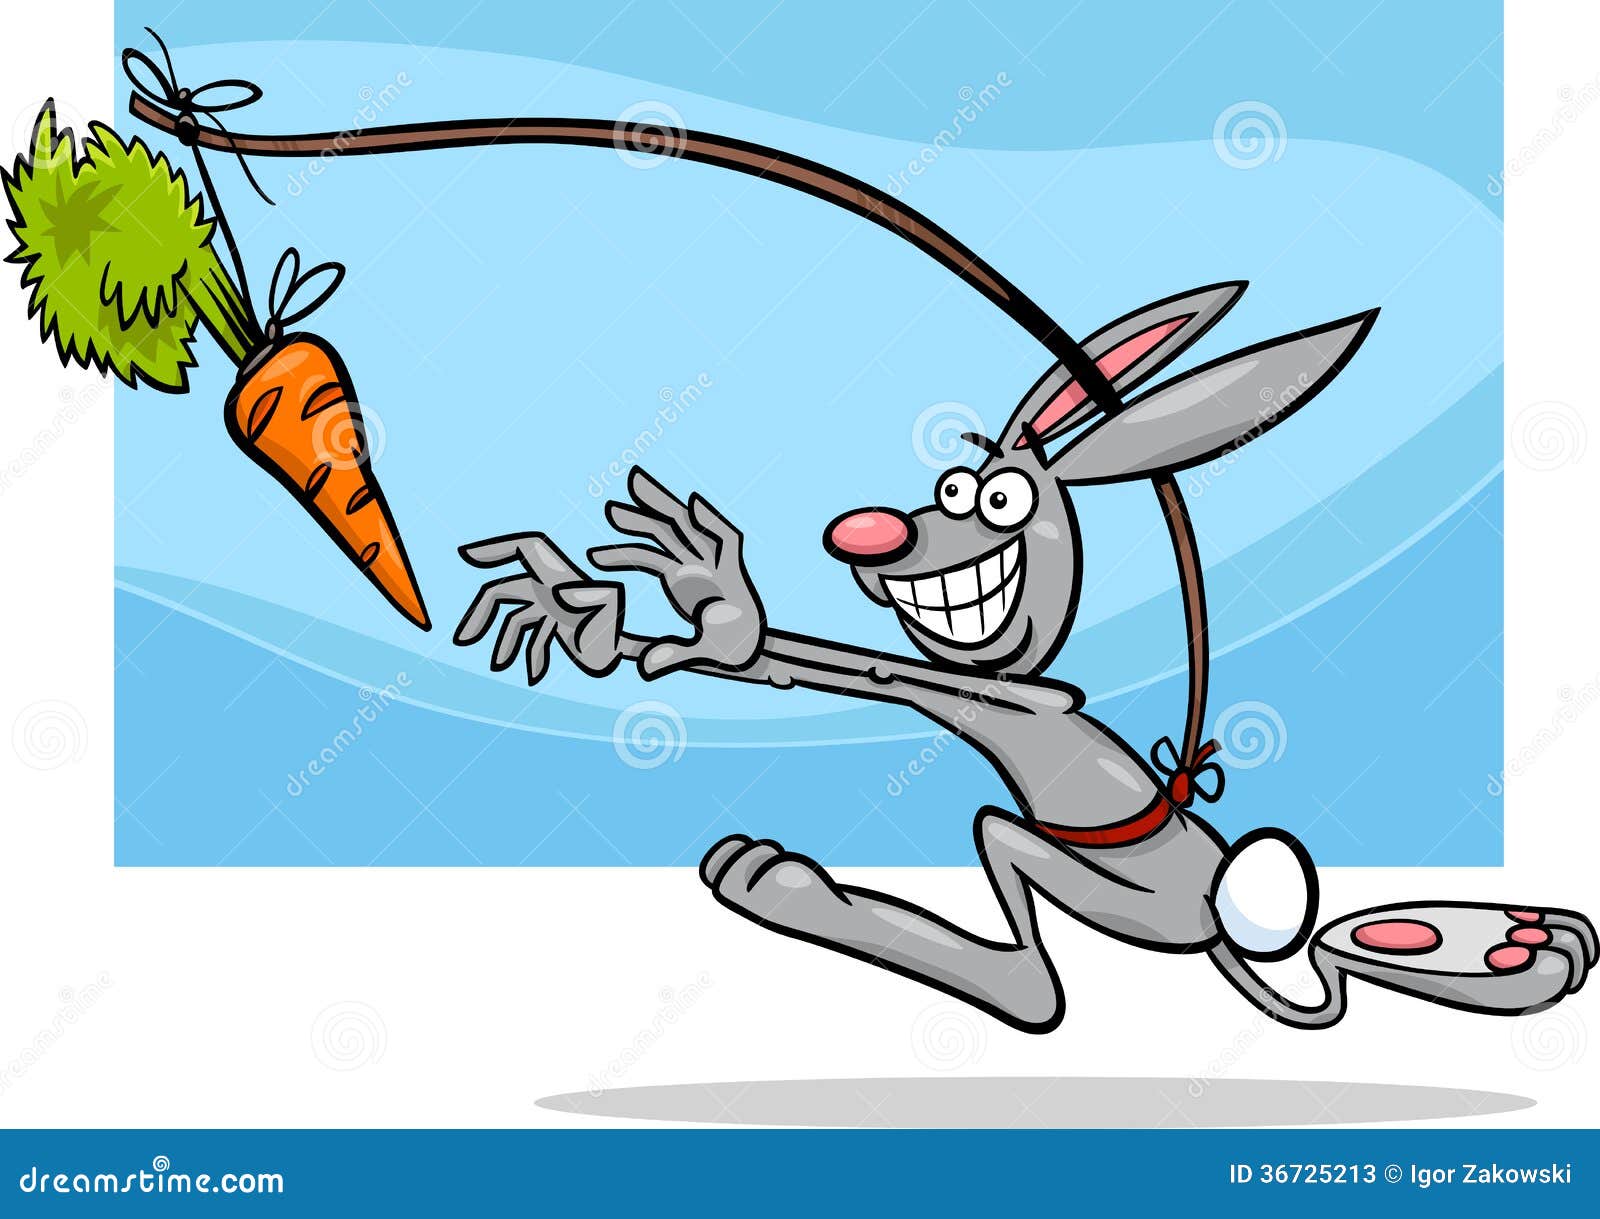 [Image: dangling-carrot-saying-cartoon-humor-con...725213.jpg]